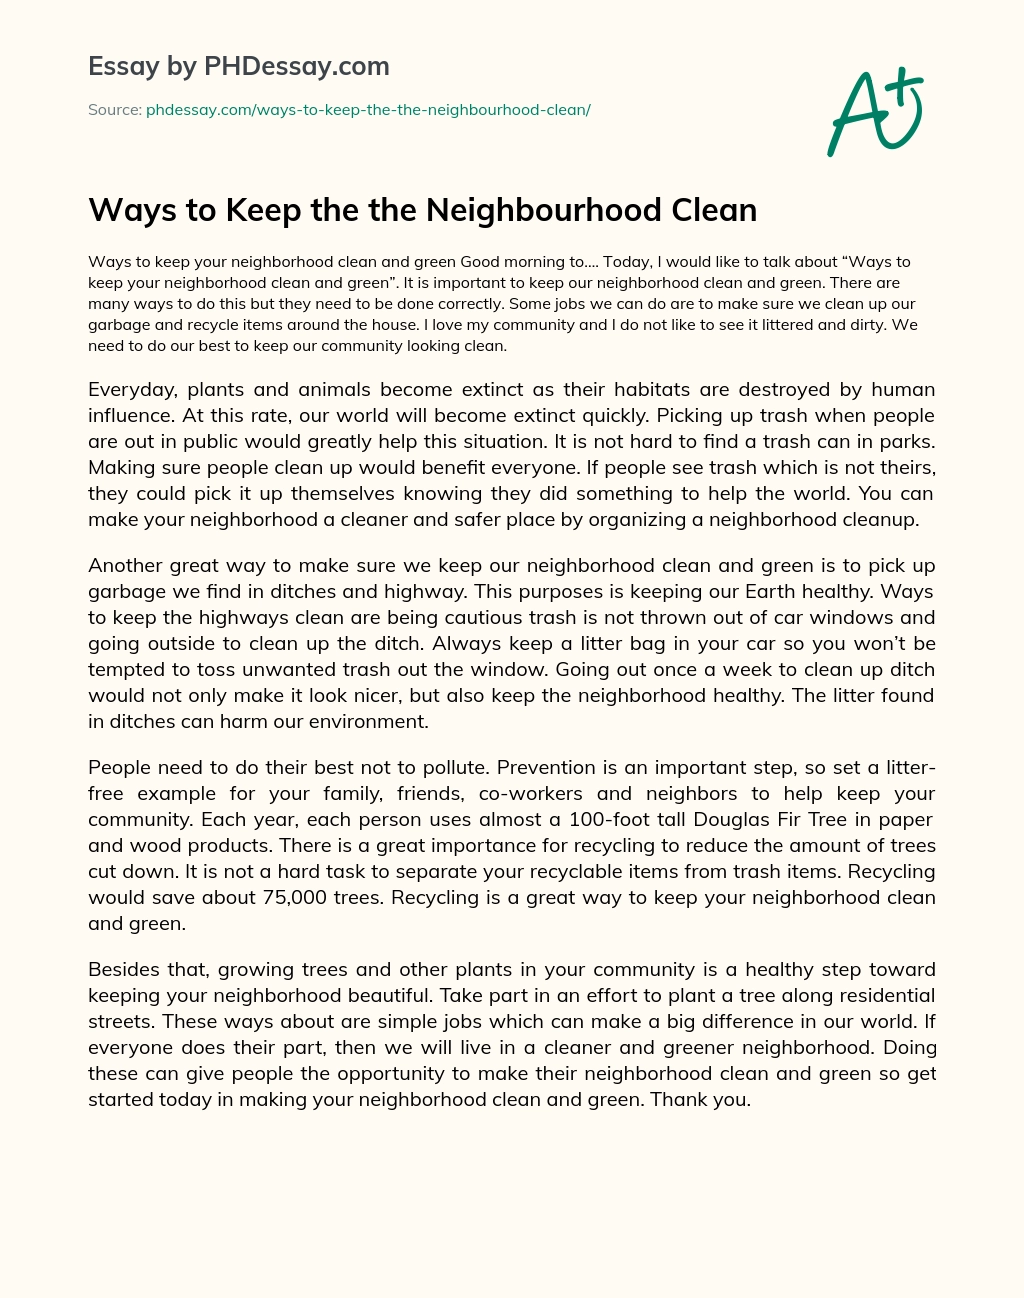 article essay how to keep clean neighbourhood